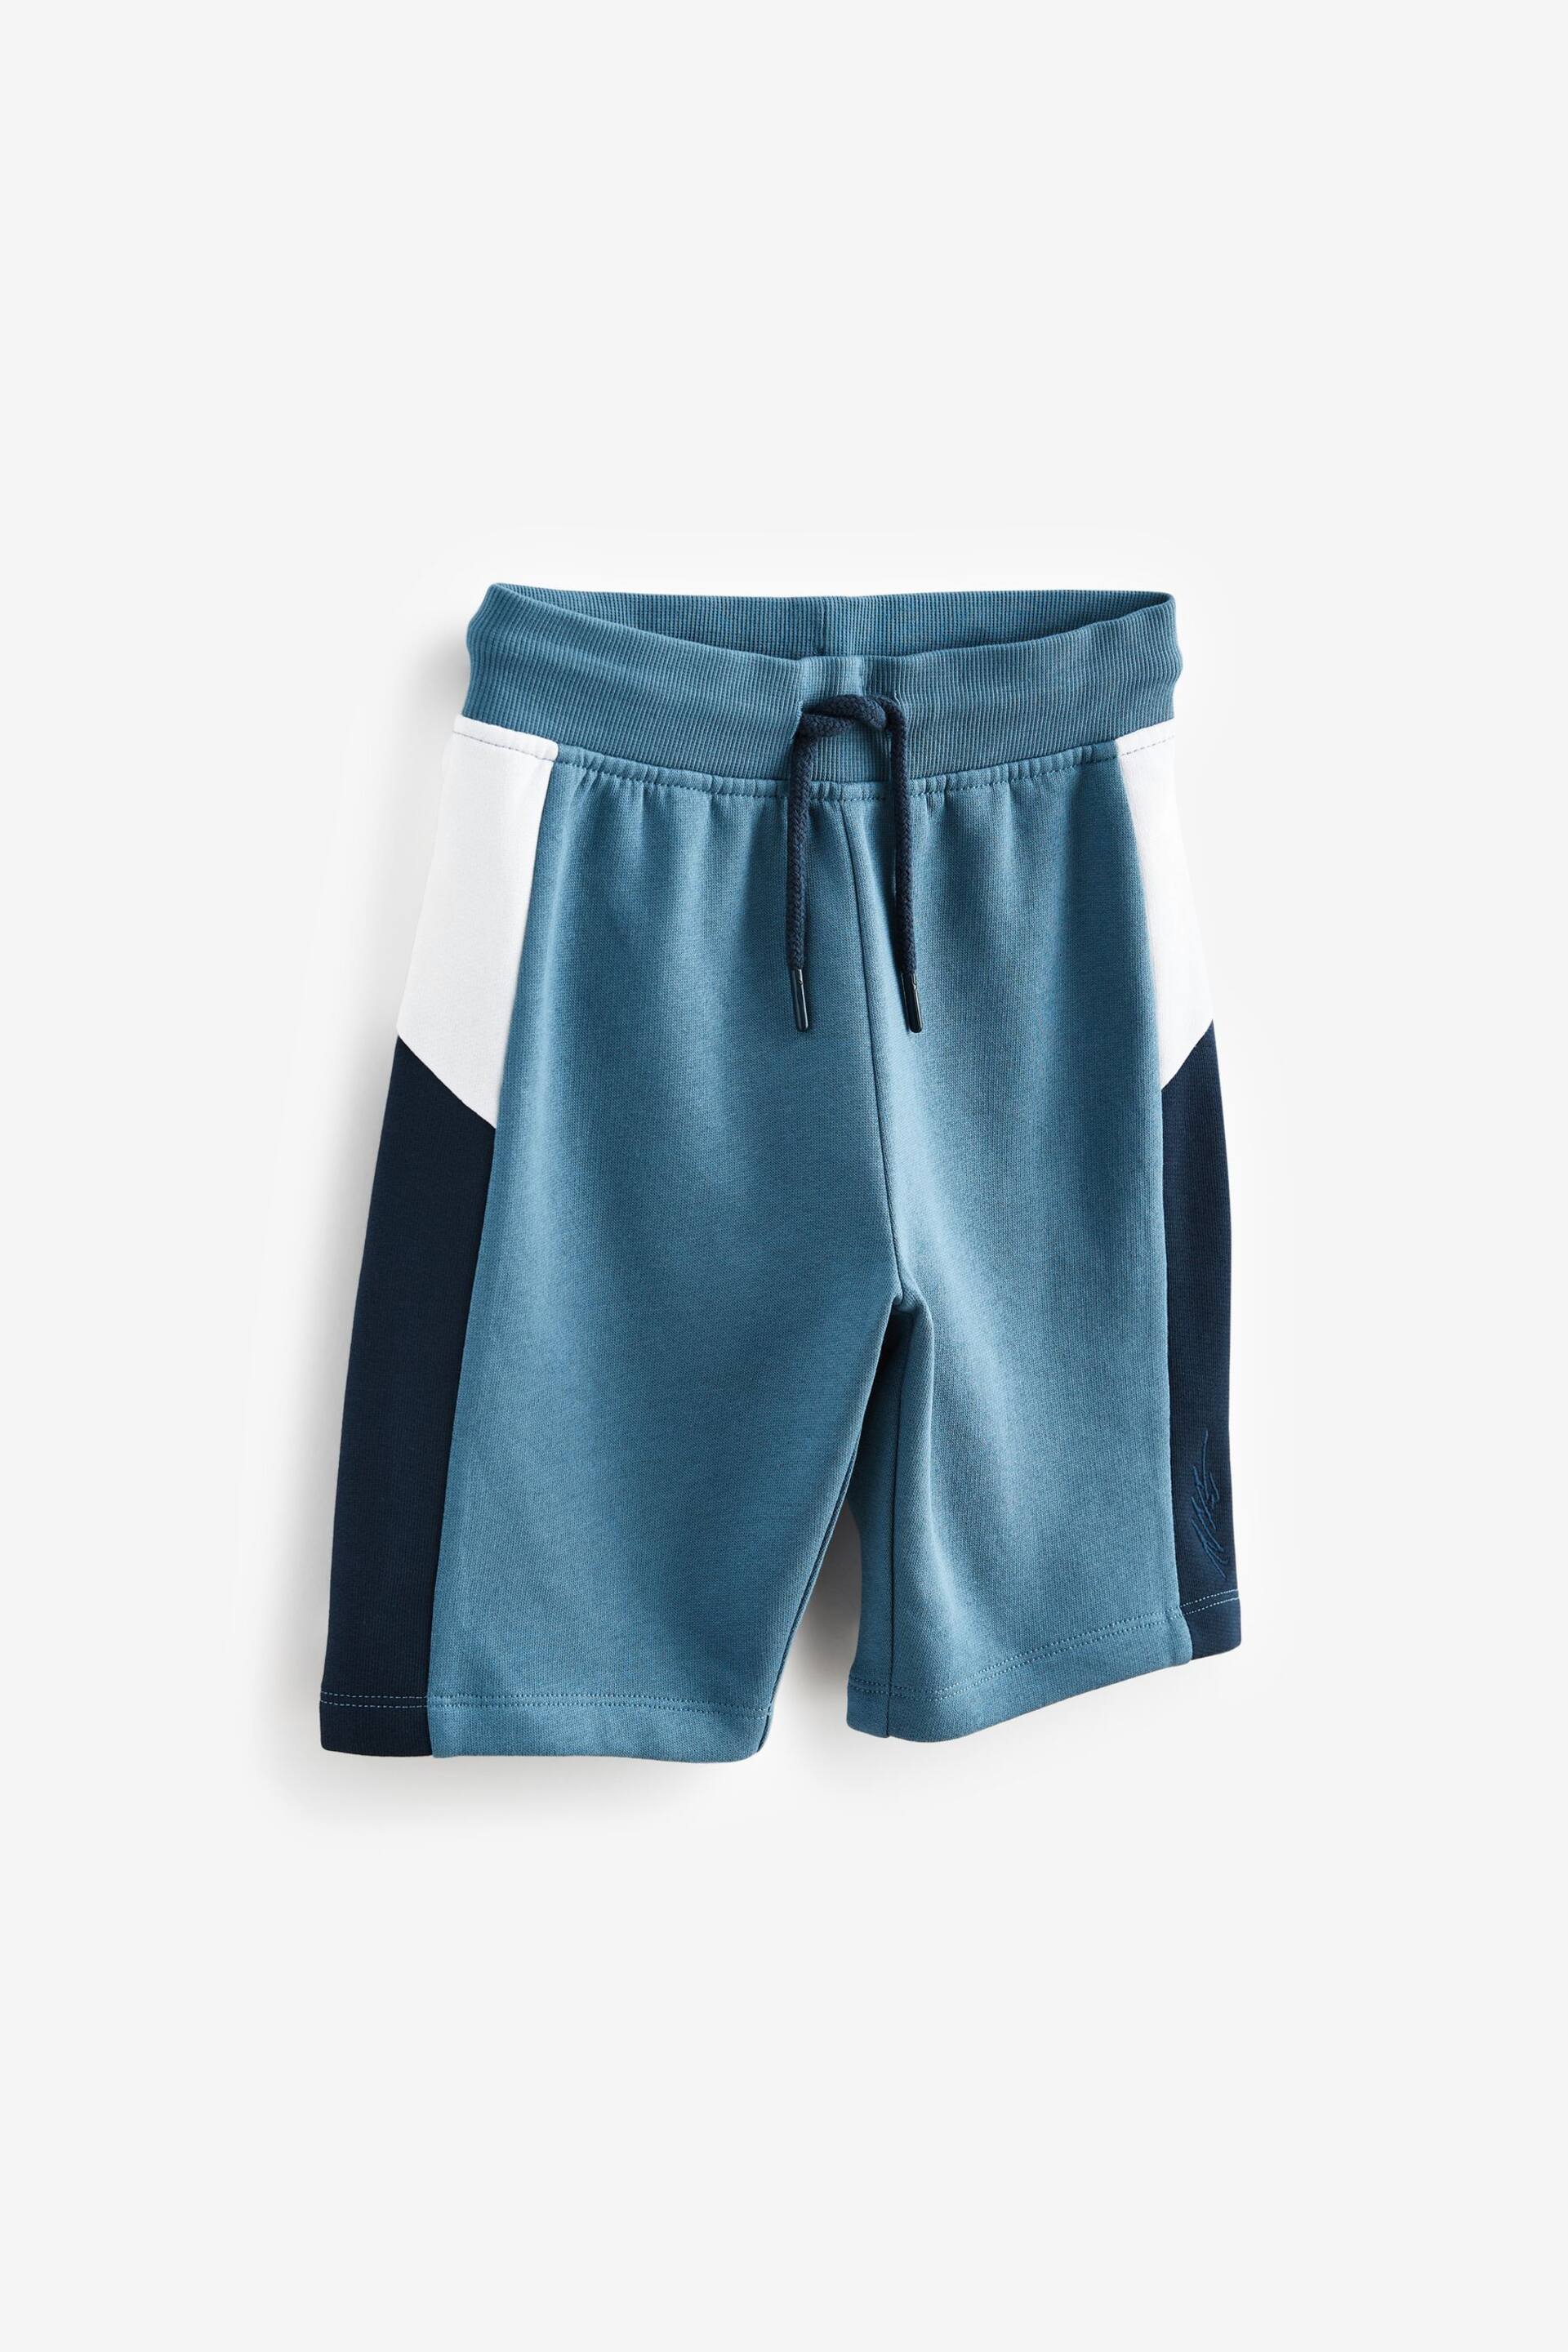 Blue Colourblock Shorts and T-Shirt Set (3-16yrs) - Image 3 of 4